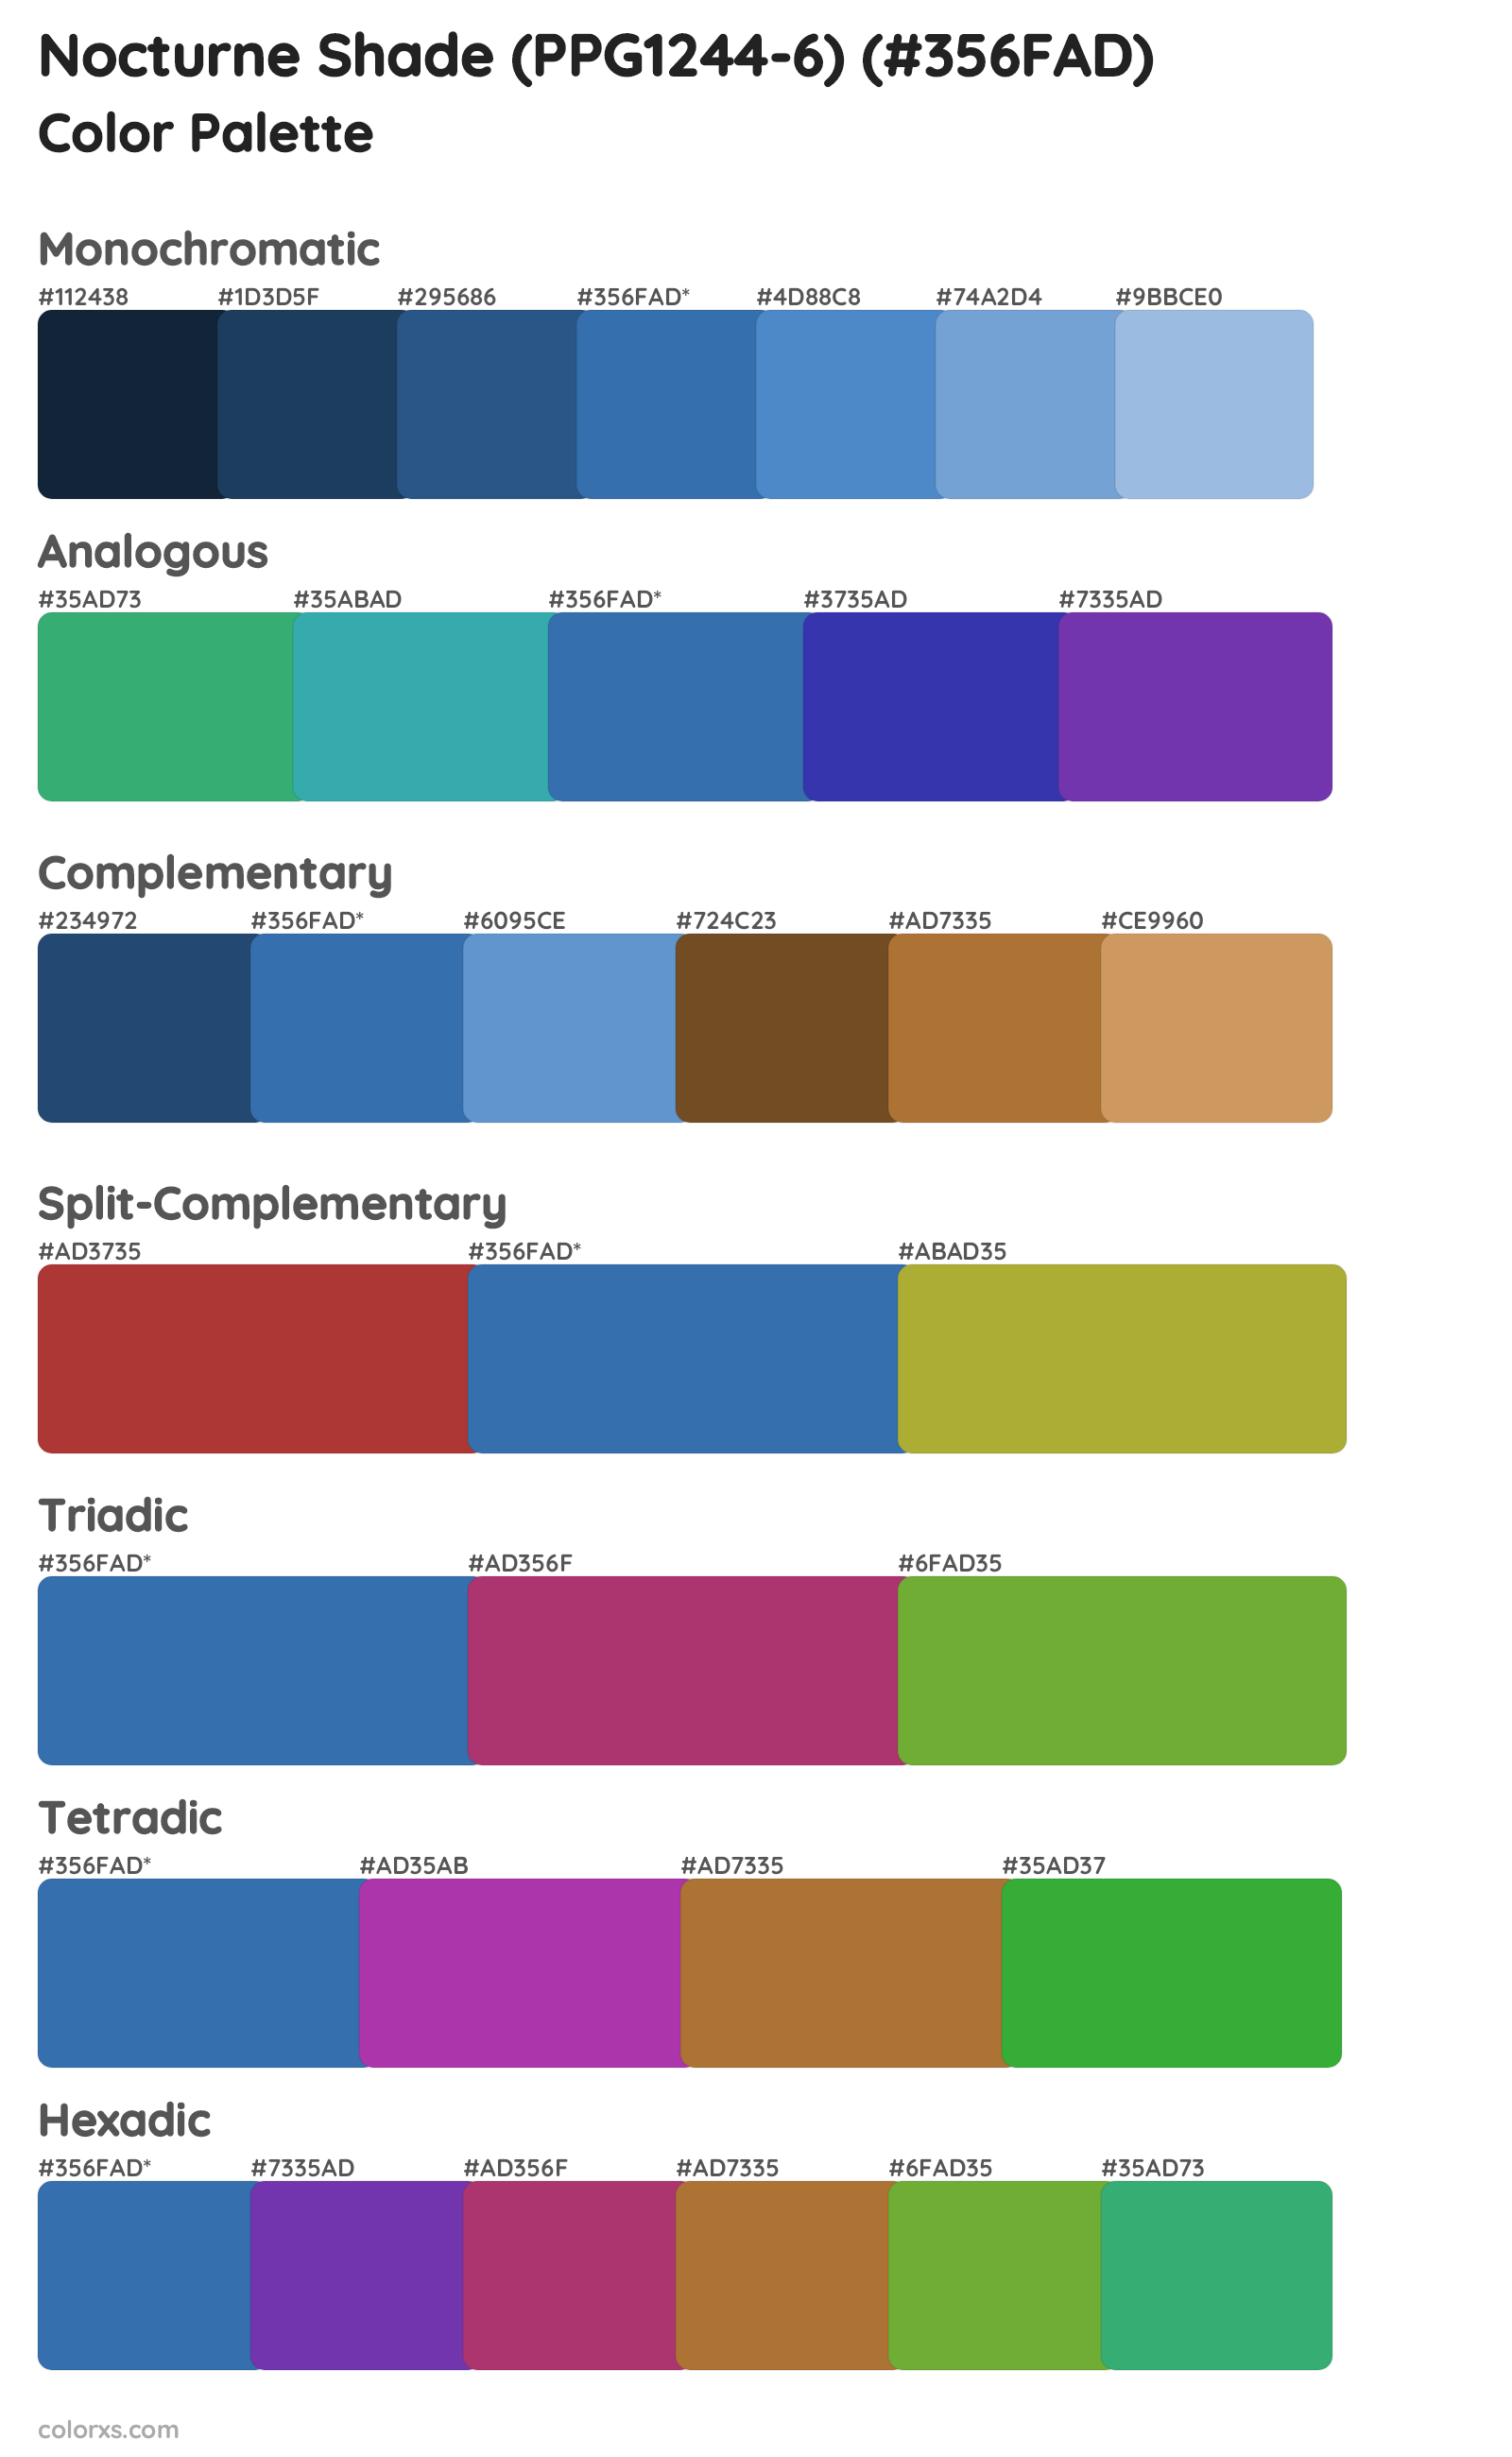 Nocturne Shade (PPG1244-6) Color Scheme Palettes